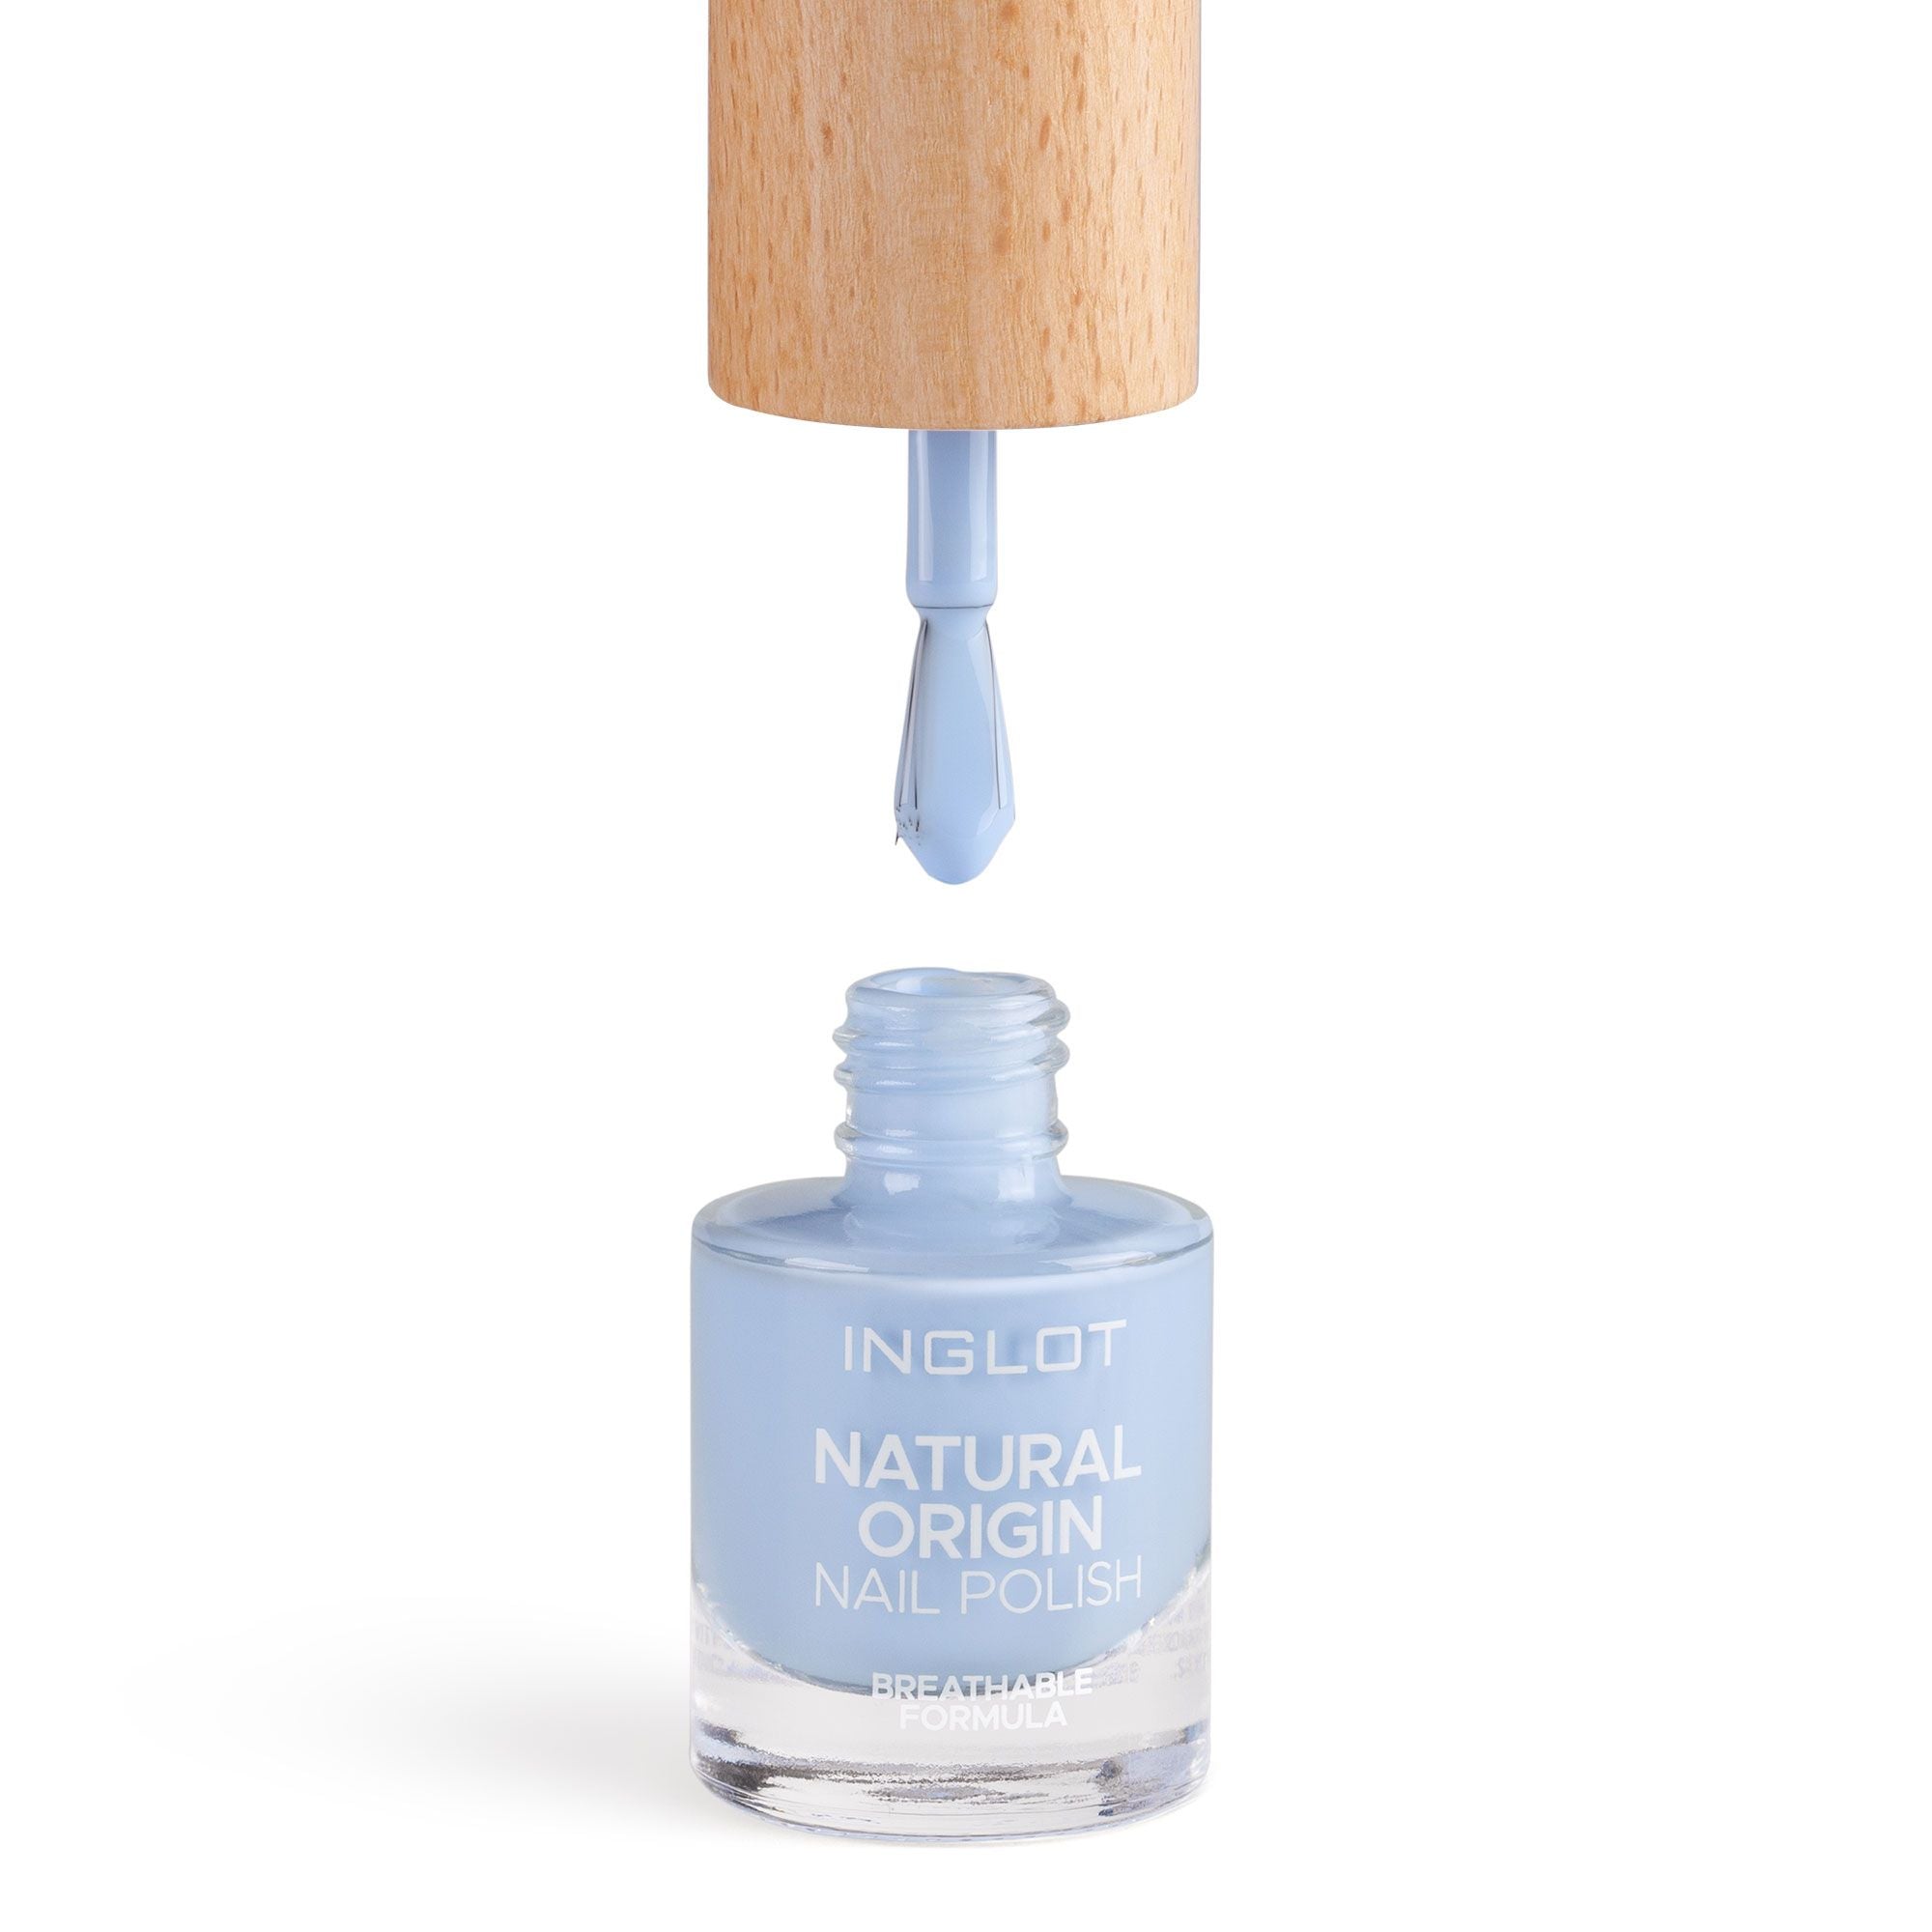 Natural Origin Nail Polish - 033 Alaska Coast_1 - Inglot Cosmetics